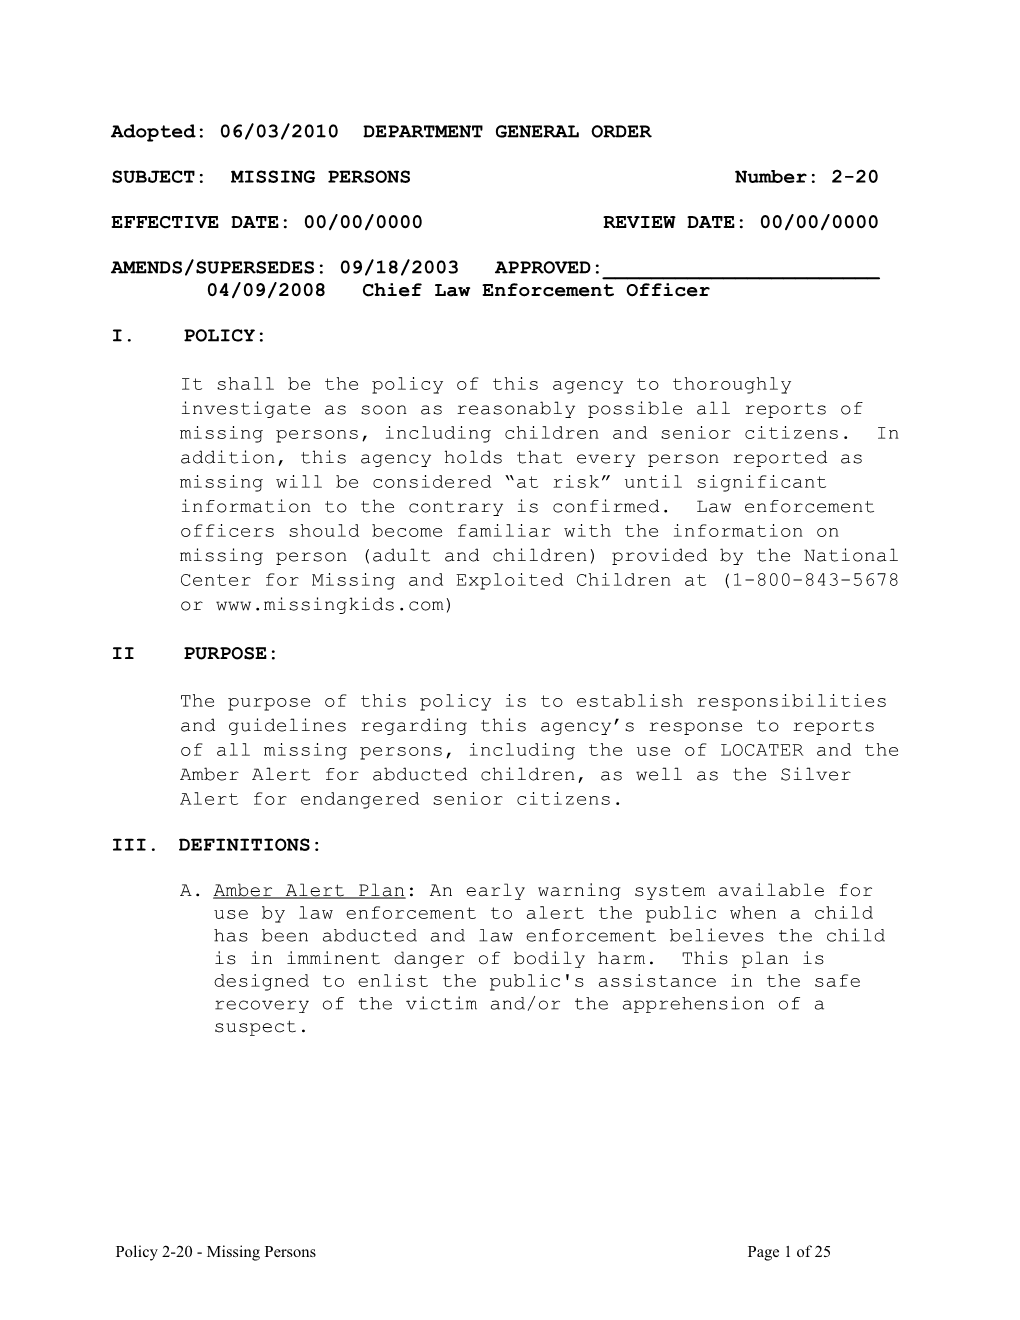 Adopted: DEPARTMENT GENERAL ORDER Draft 10/24/2007